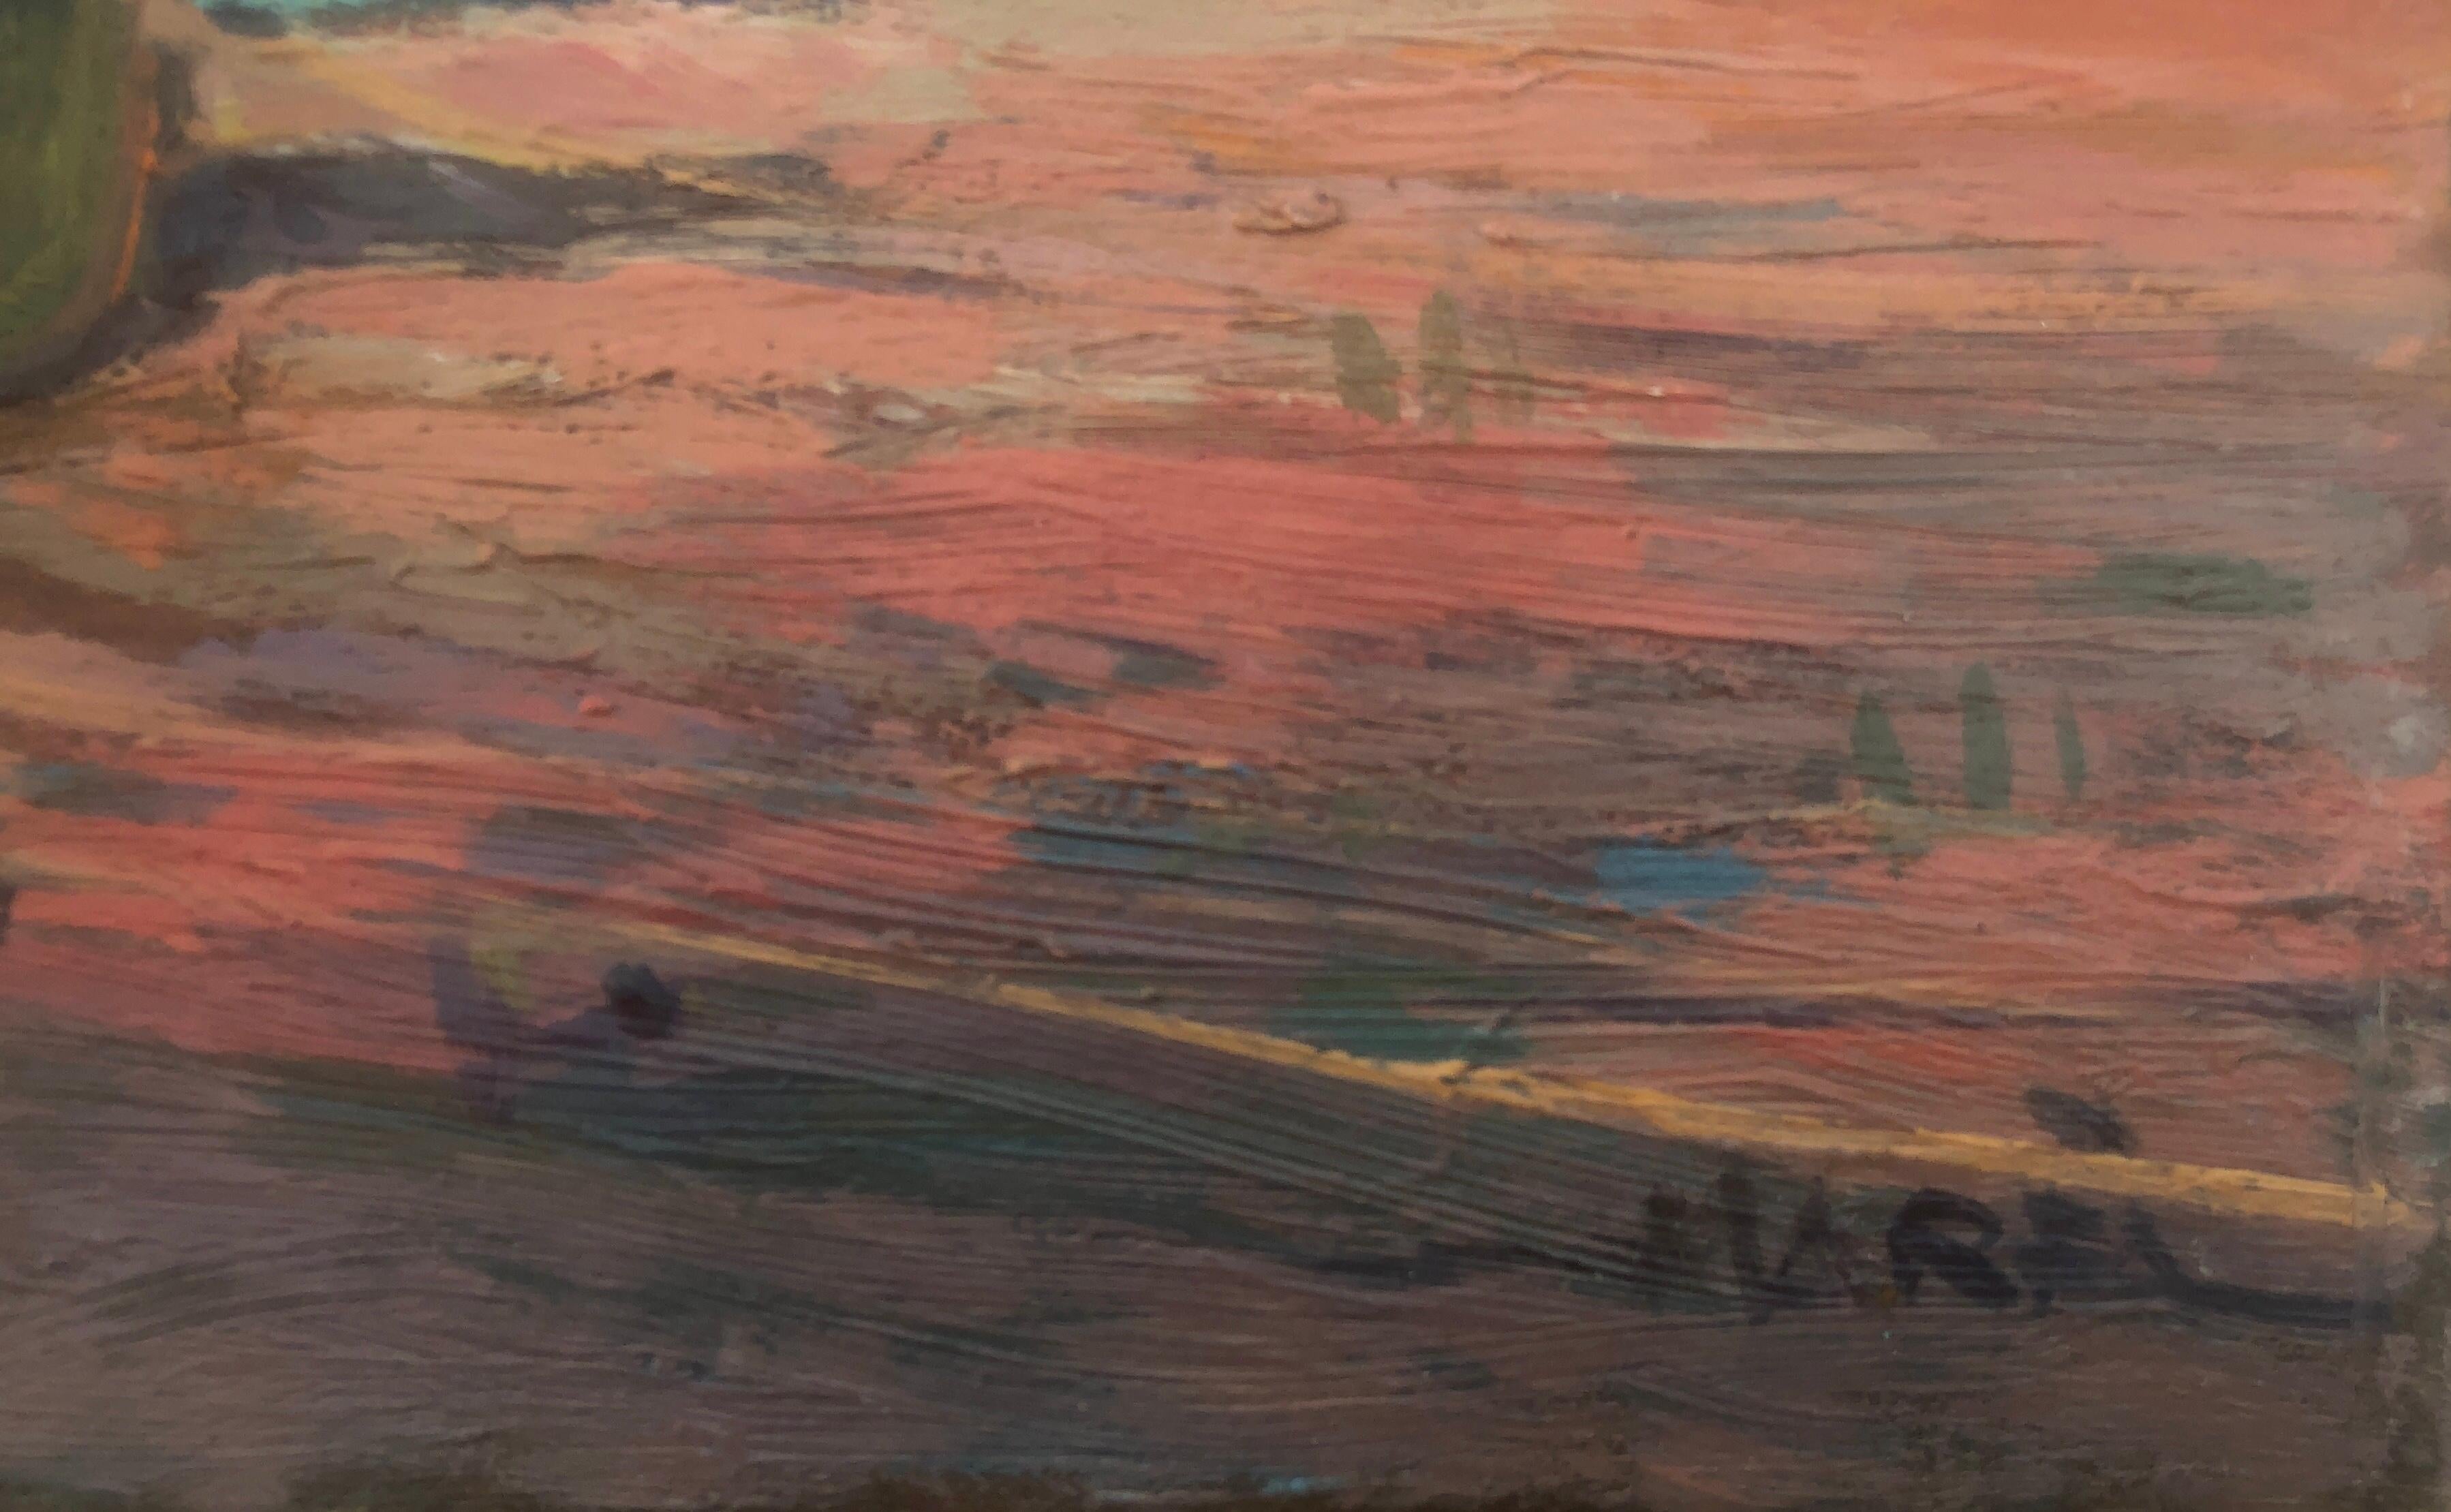 Plage de pêcheurs paysage marin espagnol peinture originale huile sur carton méditerranée - Painting de Josep Marfa Guarro